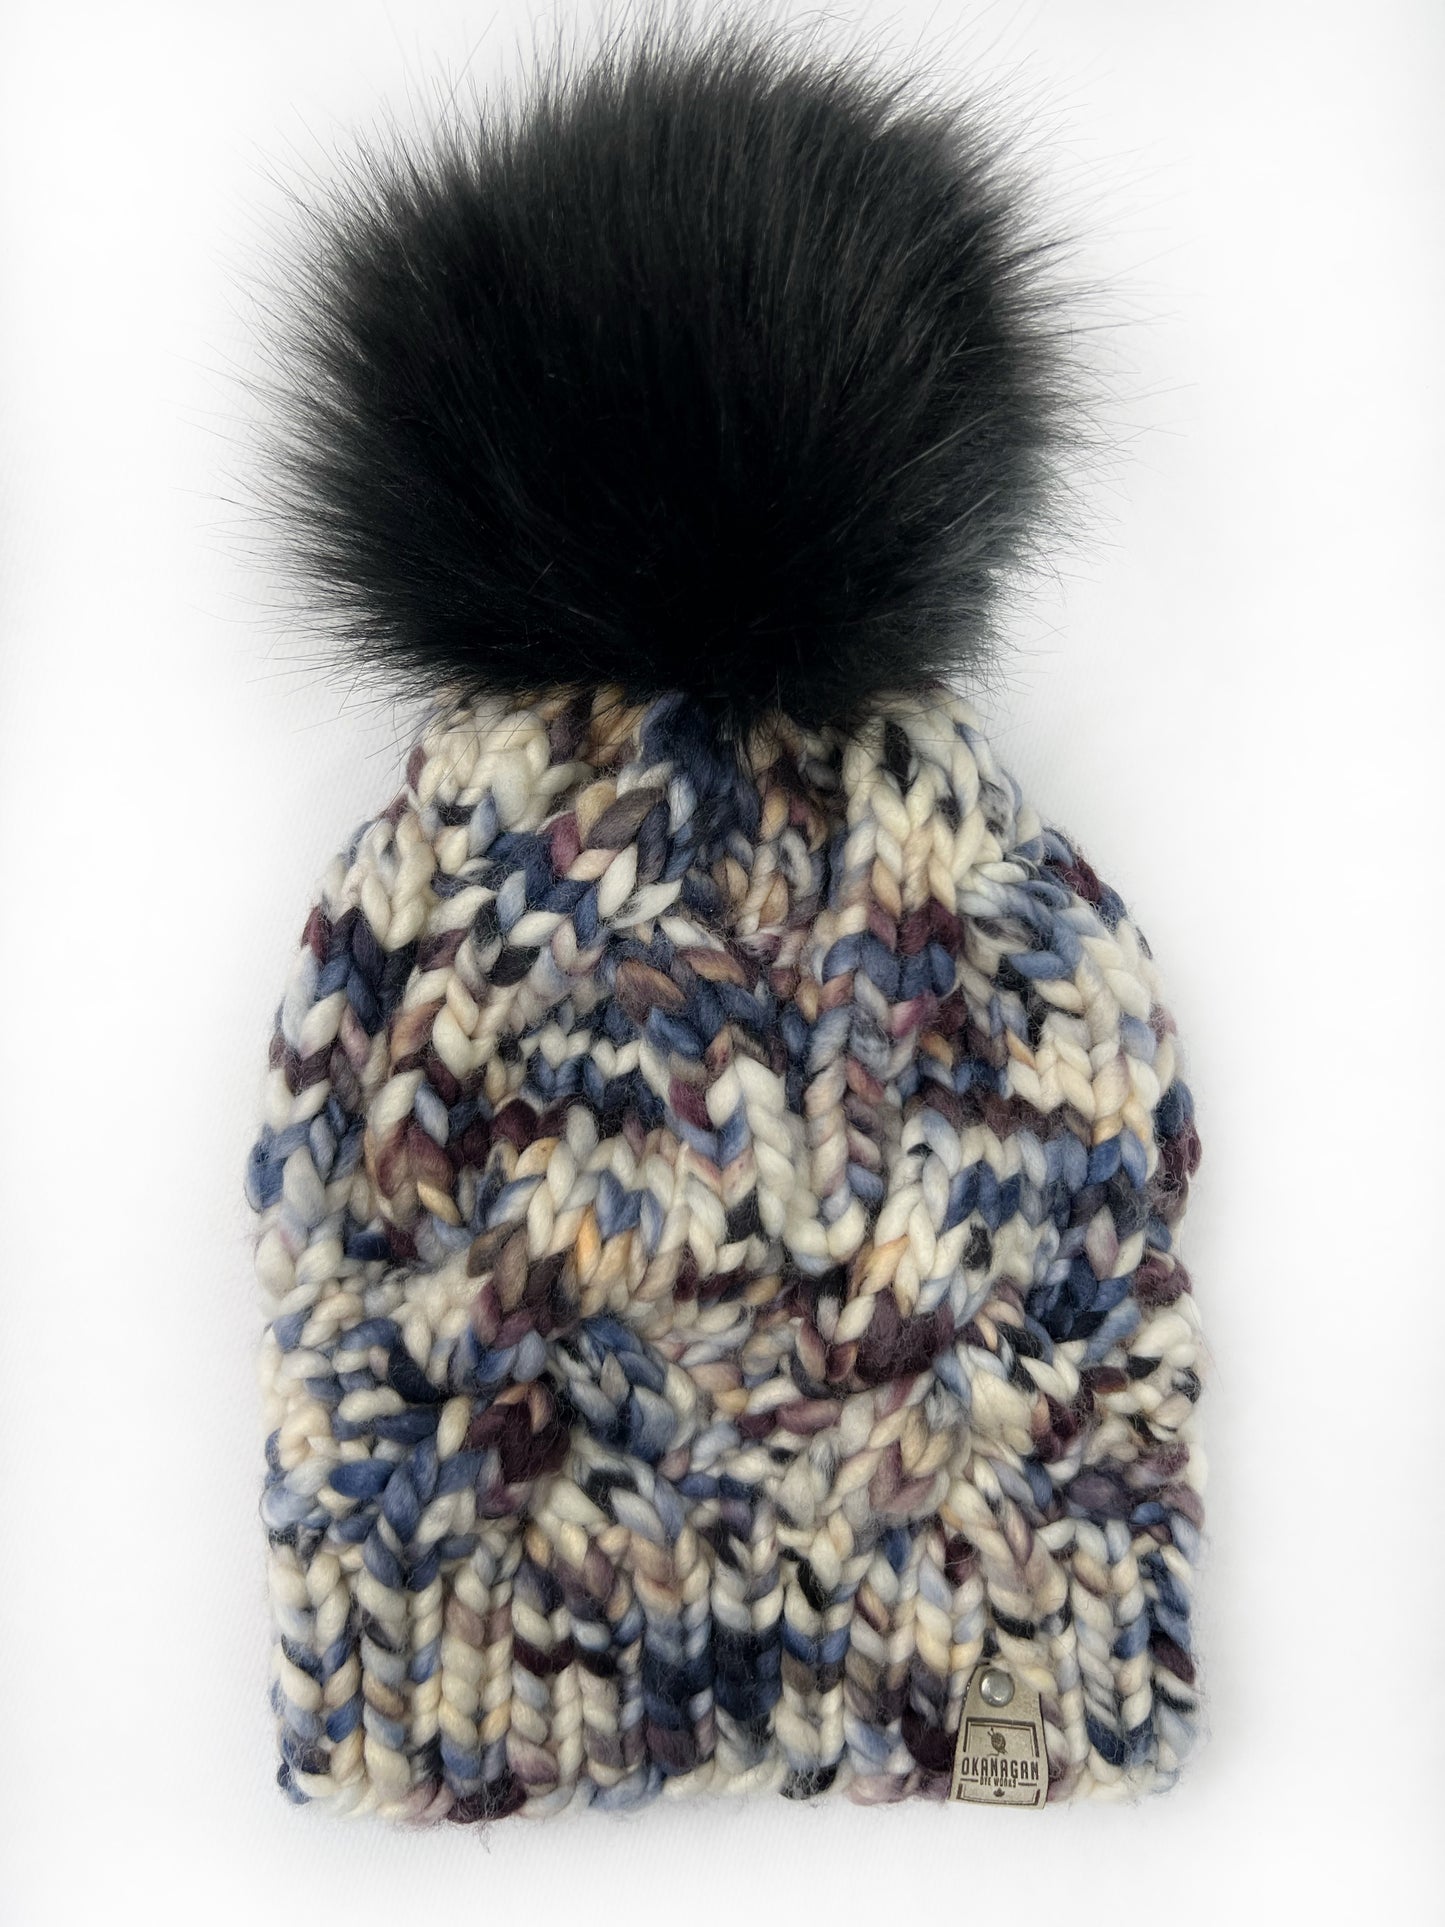 Beautifully soft 100% Merino Wool hand knitted toque. Canadian Made beanie in hand dyed yarn - Okanagan Dye Works